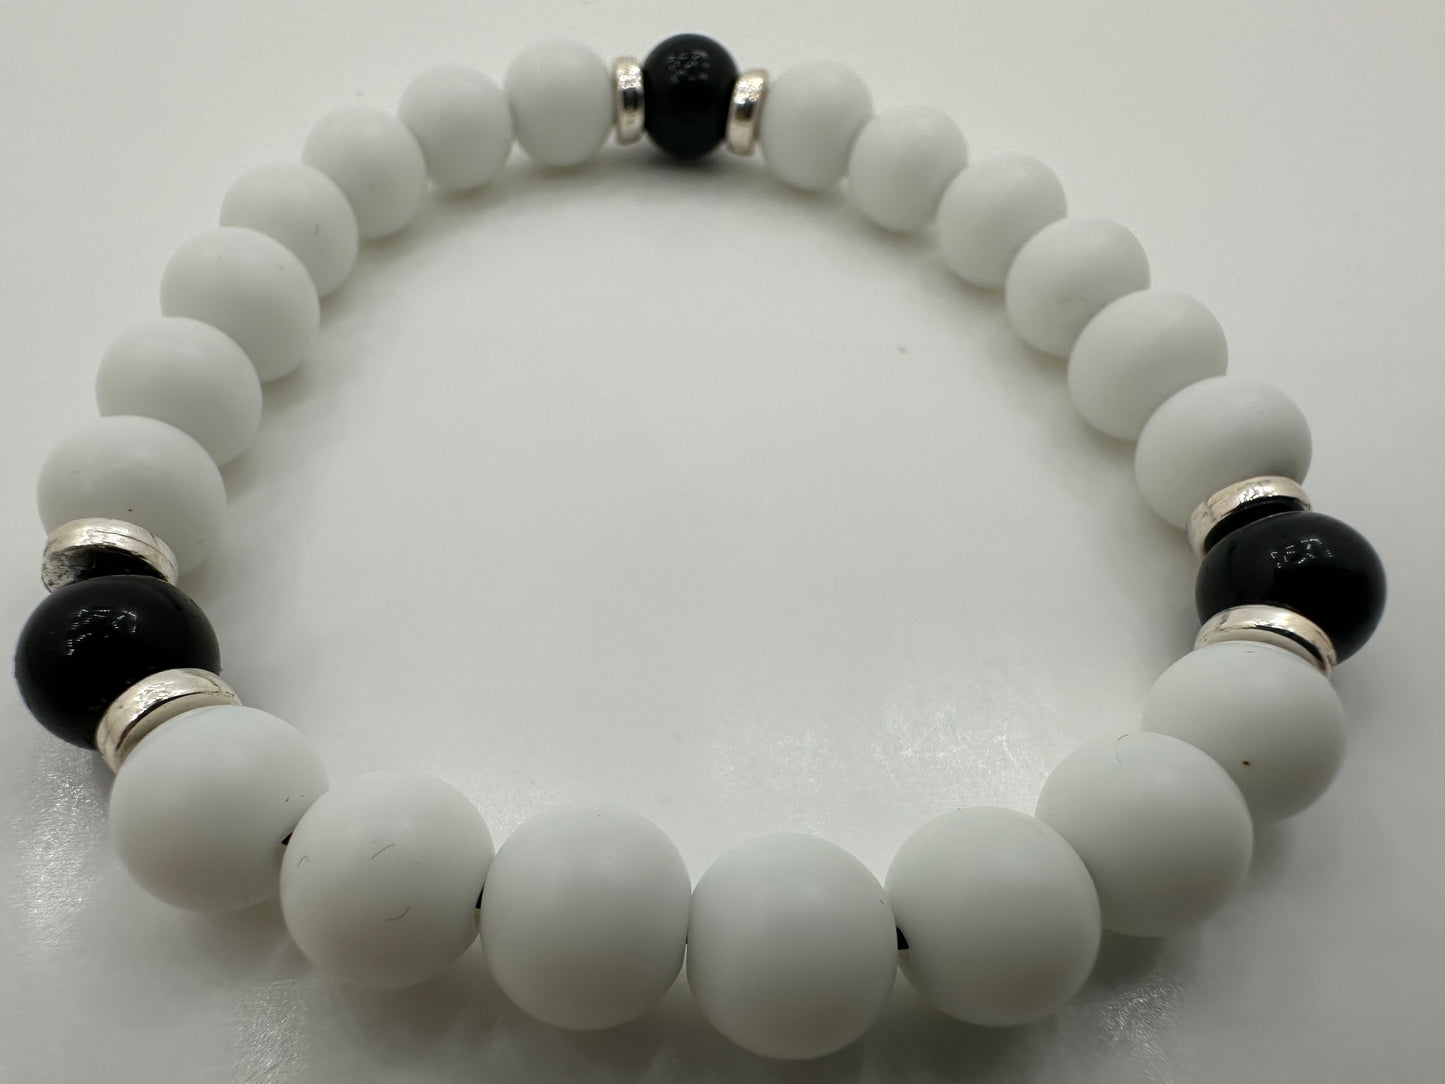 White Agate and Black Onyx Gemstone Bracelet Size 7.25 in.